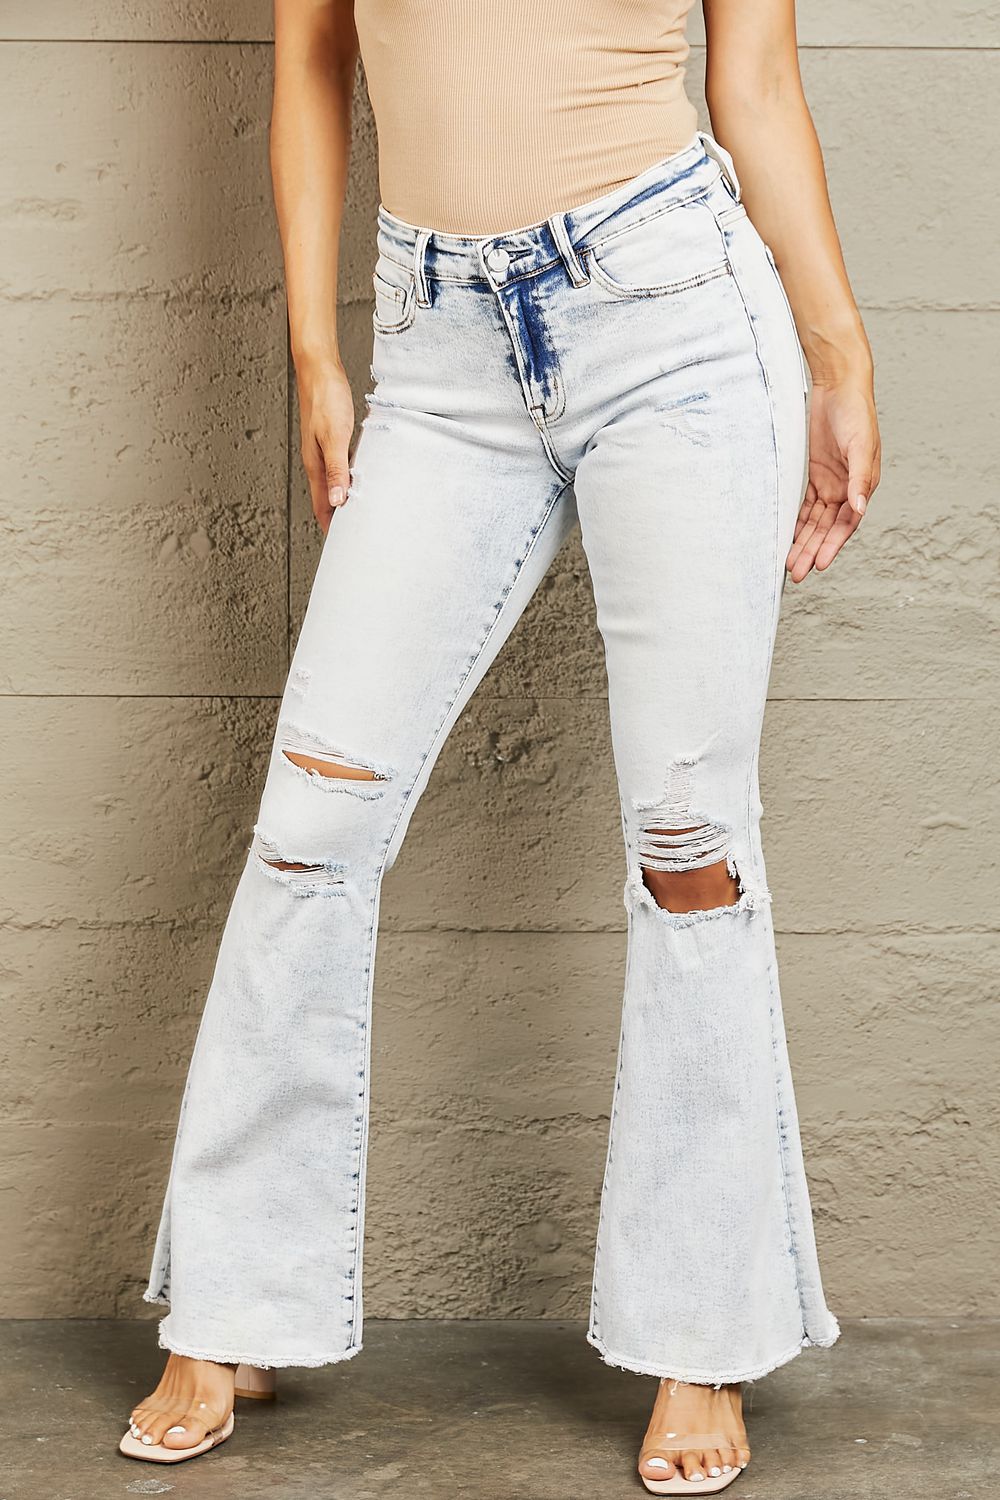 BAYEAS Mid Rise Acid Wash Distressed Jeans - Alonna's Legging Land